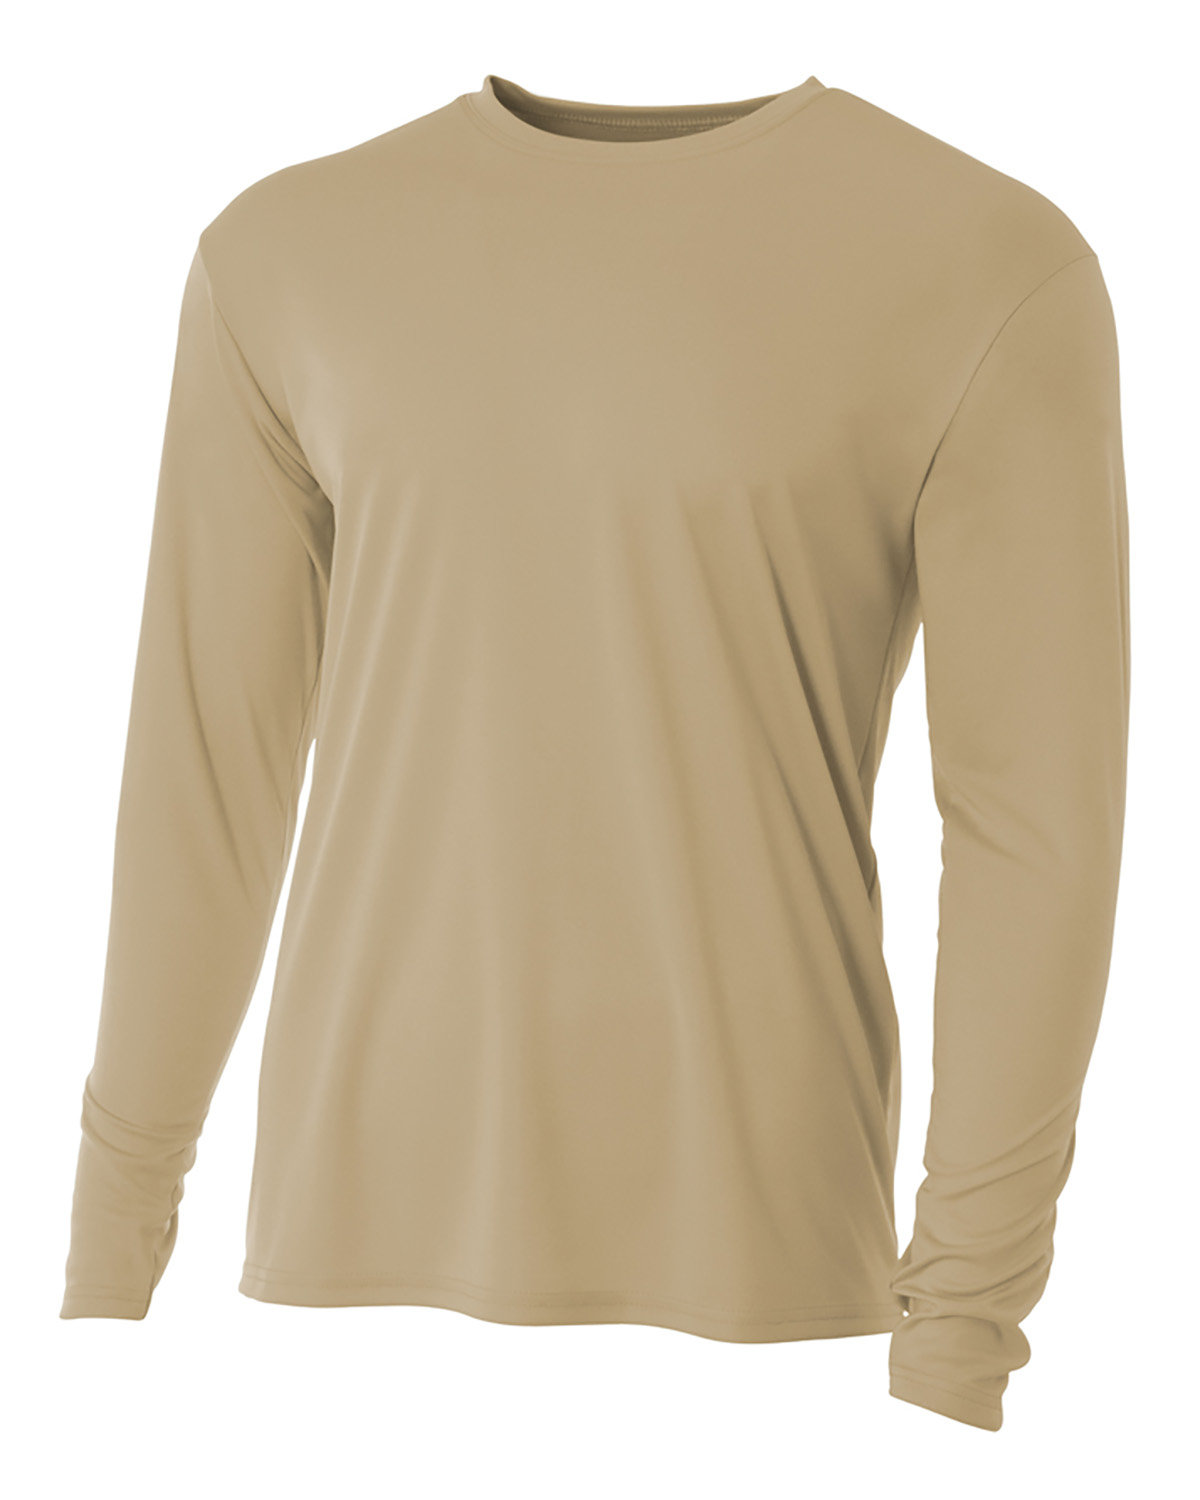 A4 Men's Cooling Performance Long Sleeve T-Shirt sand 